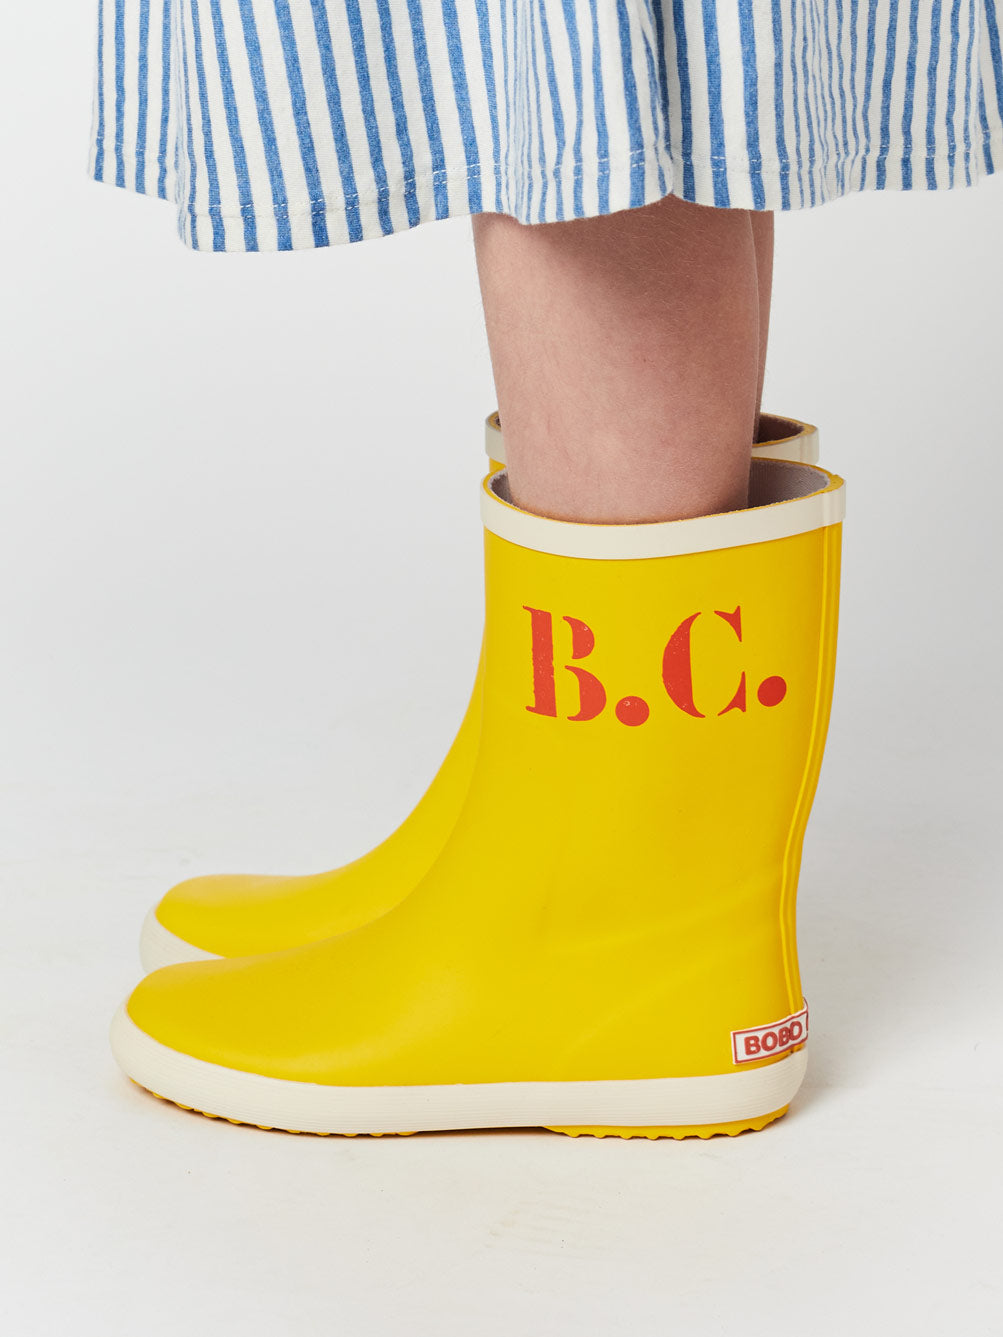 B.C rain boots